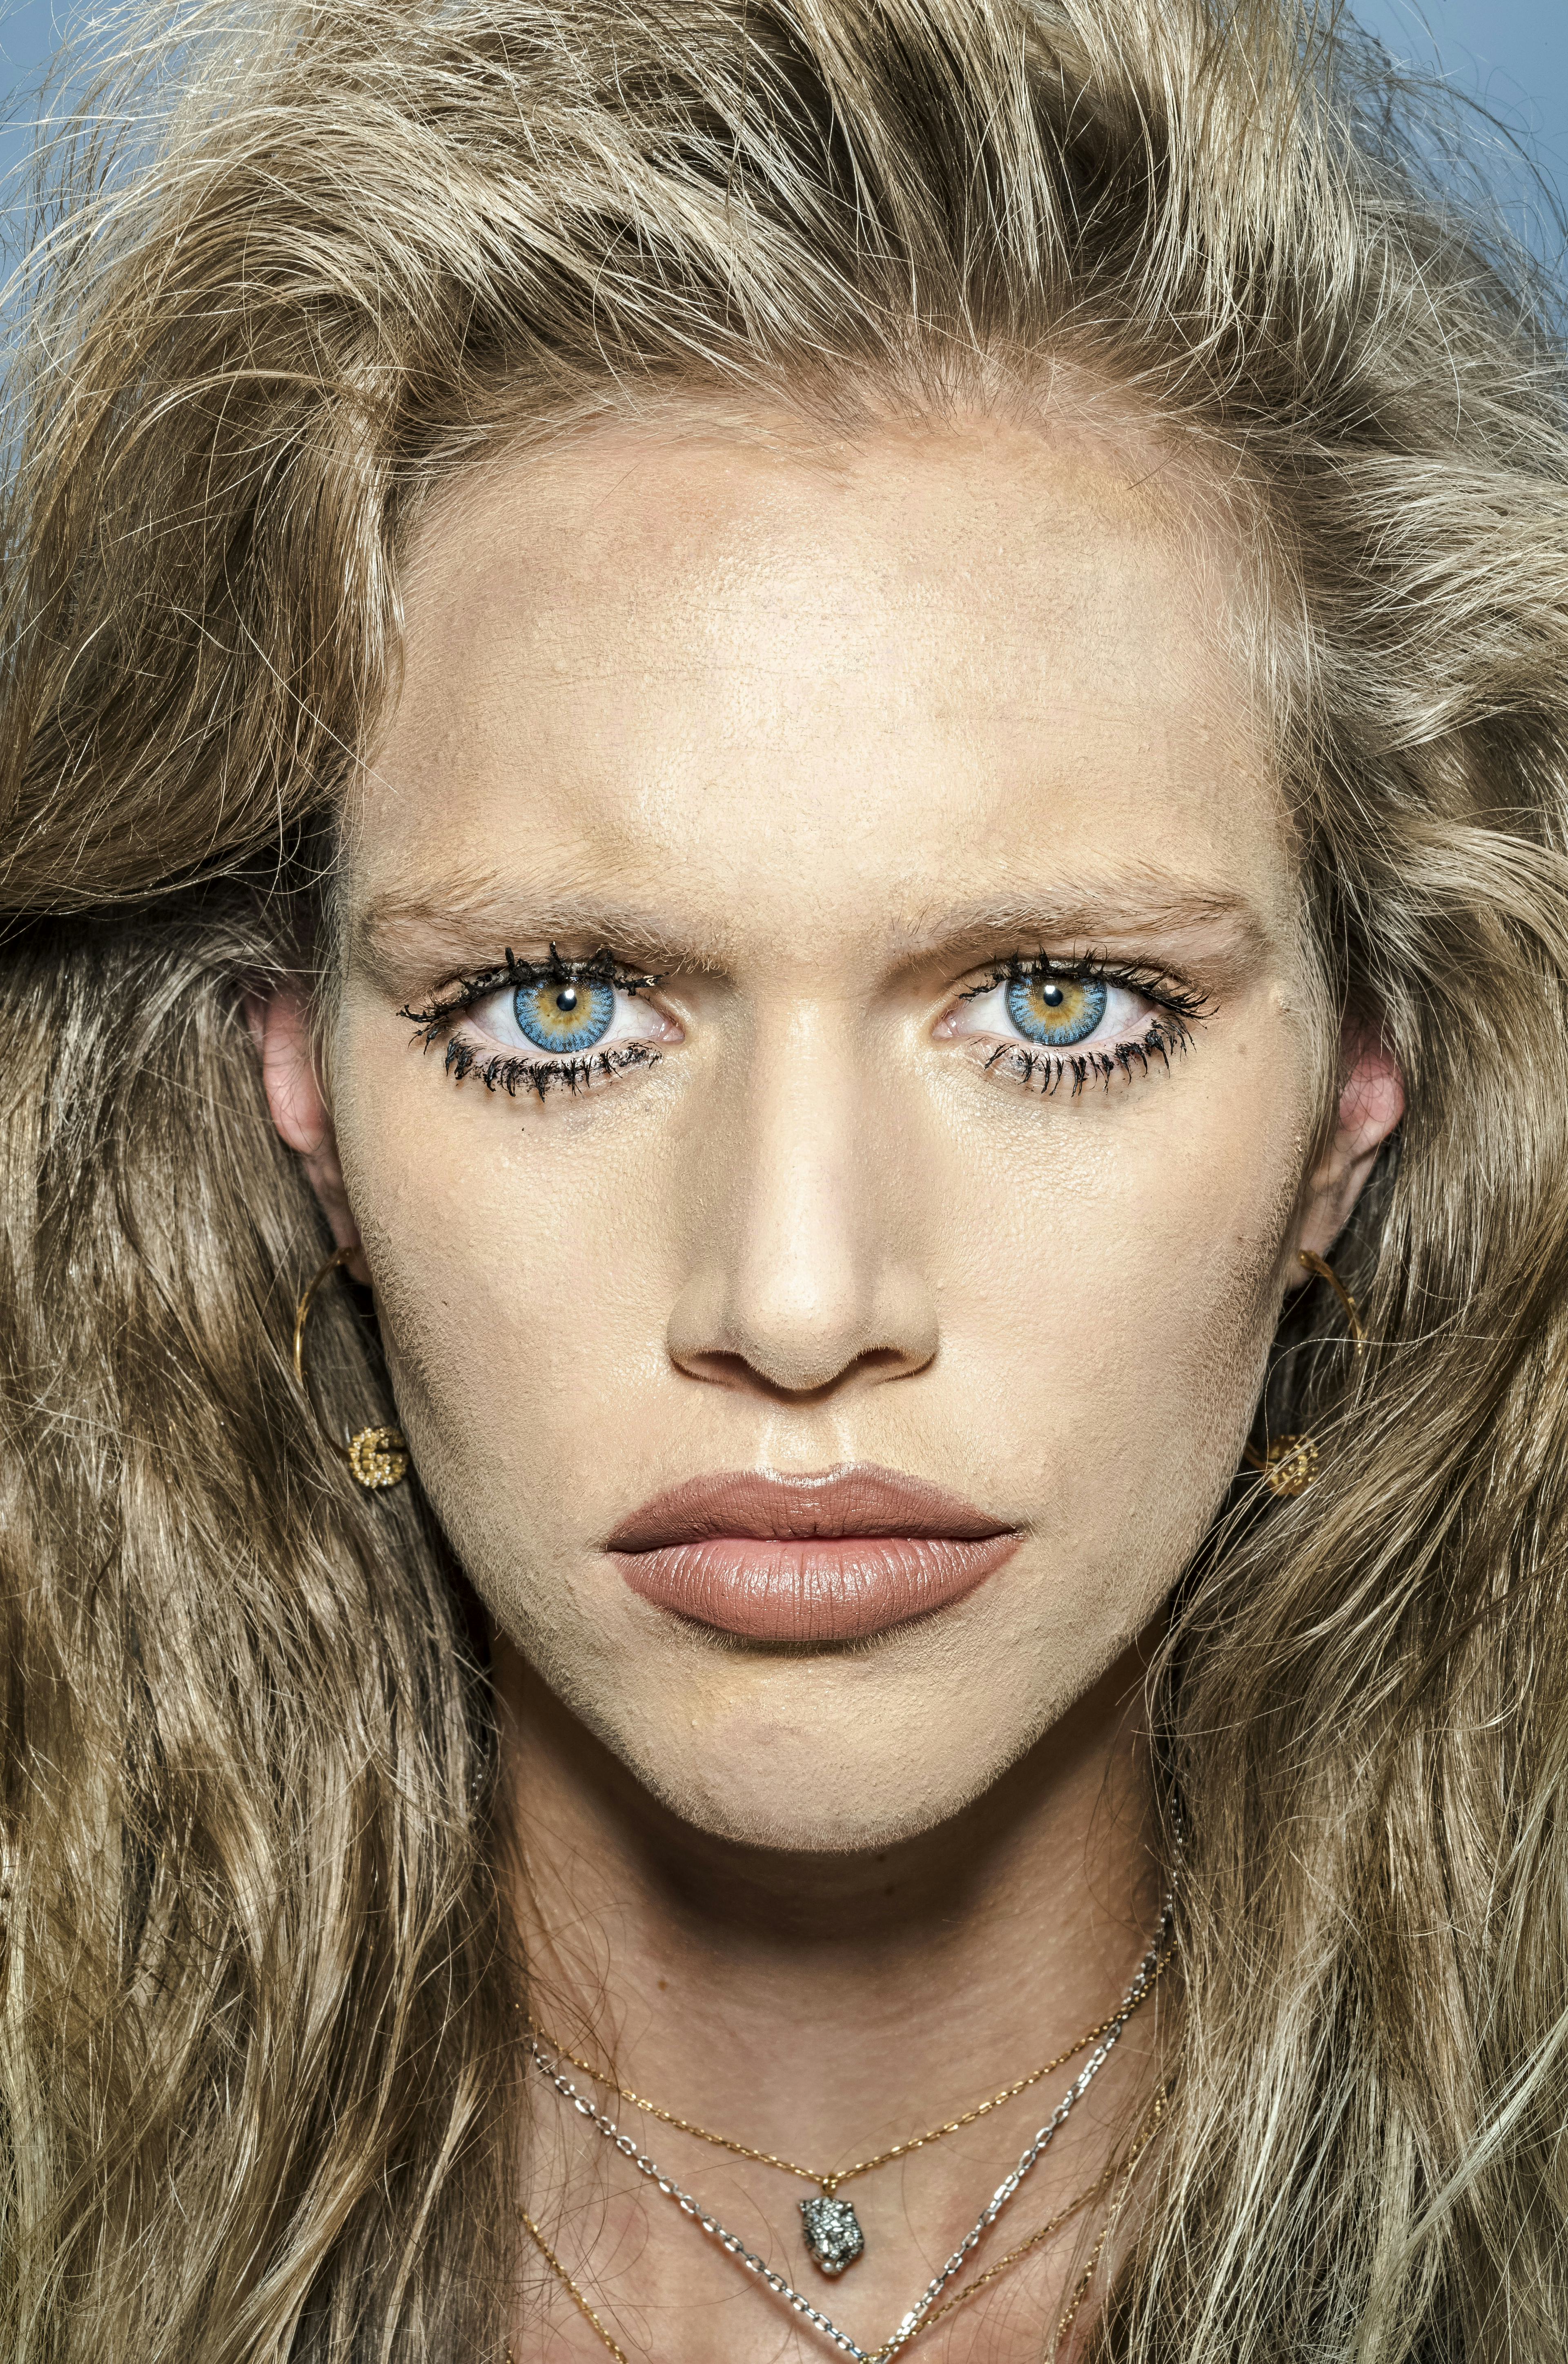 Gucci makeup fashion shoot Brooklyn New York City USA 2019 C Bruce Gilden Magnum Photos